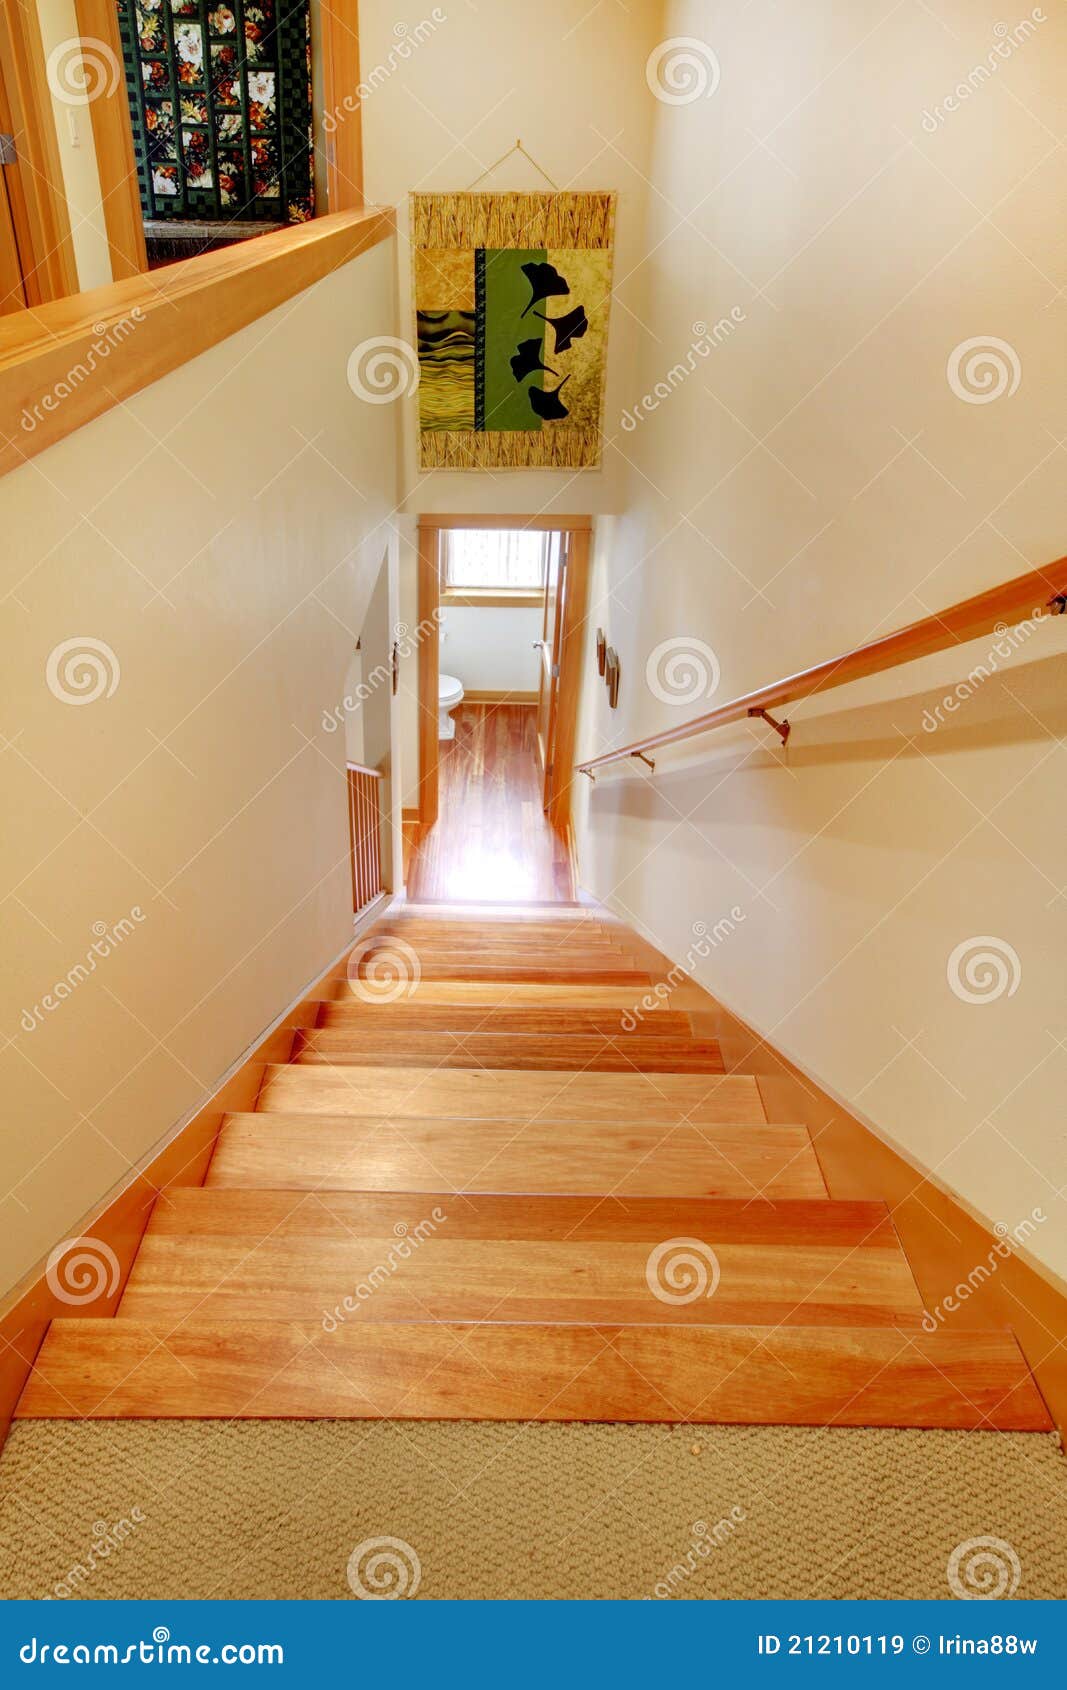 staircase and ipen door to the bathroom